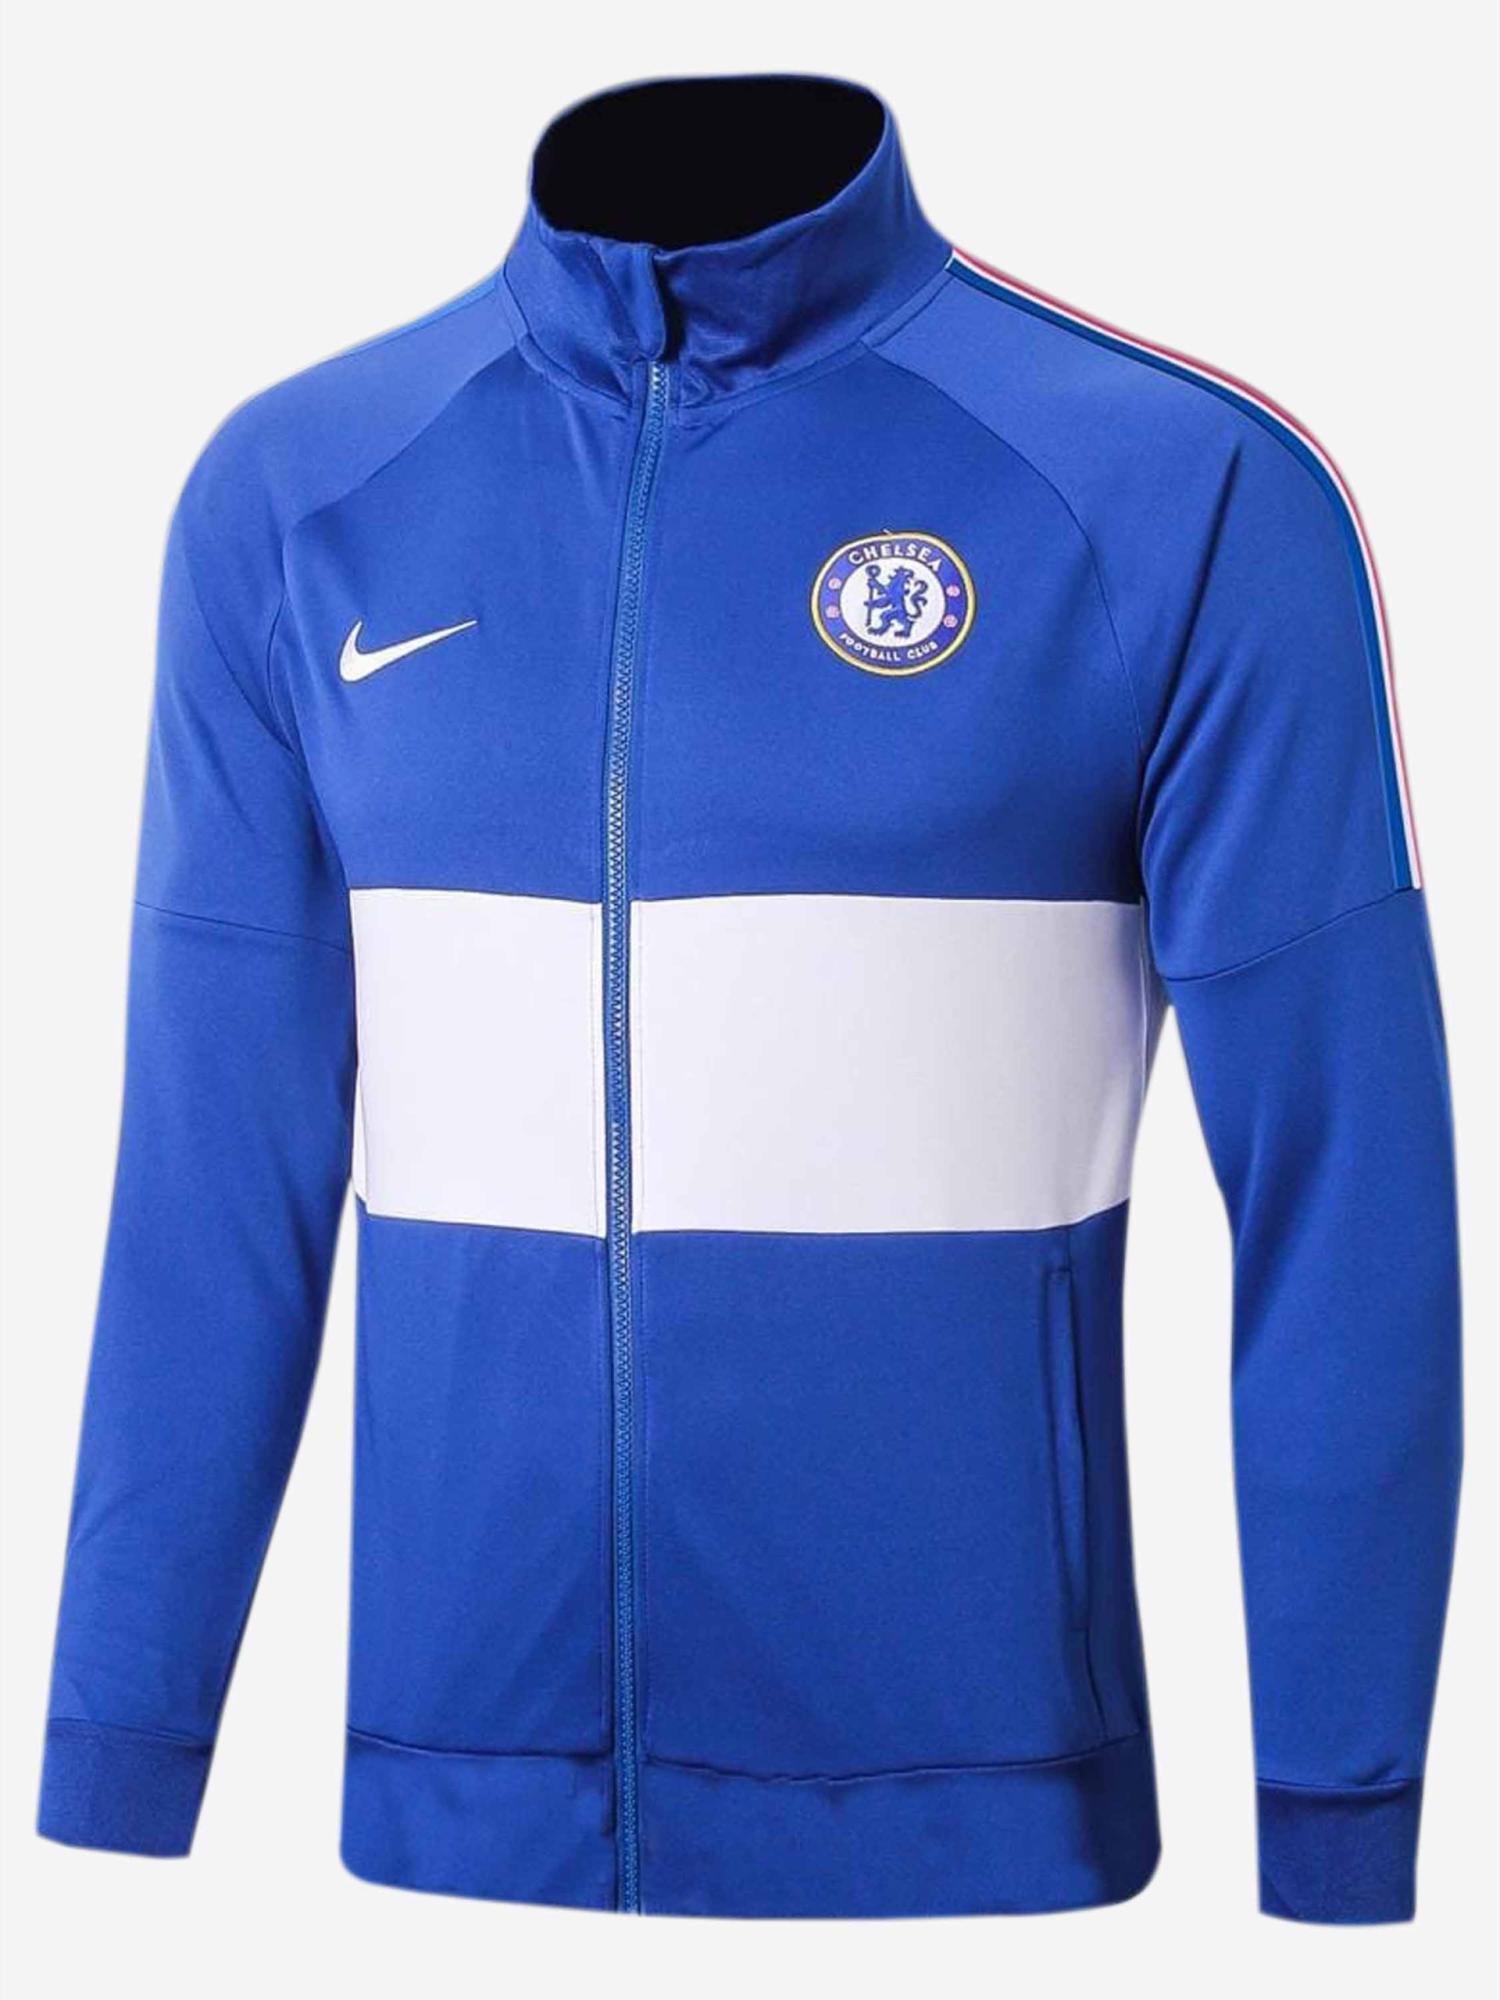 Chelsea-Blue-Football-Jacket-21-22-Season-Premium